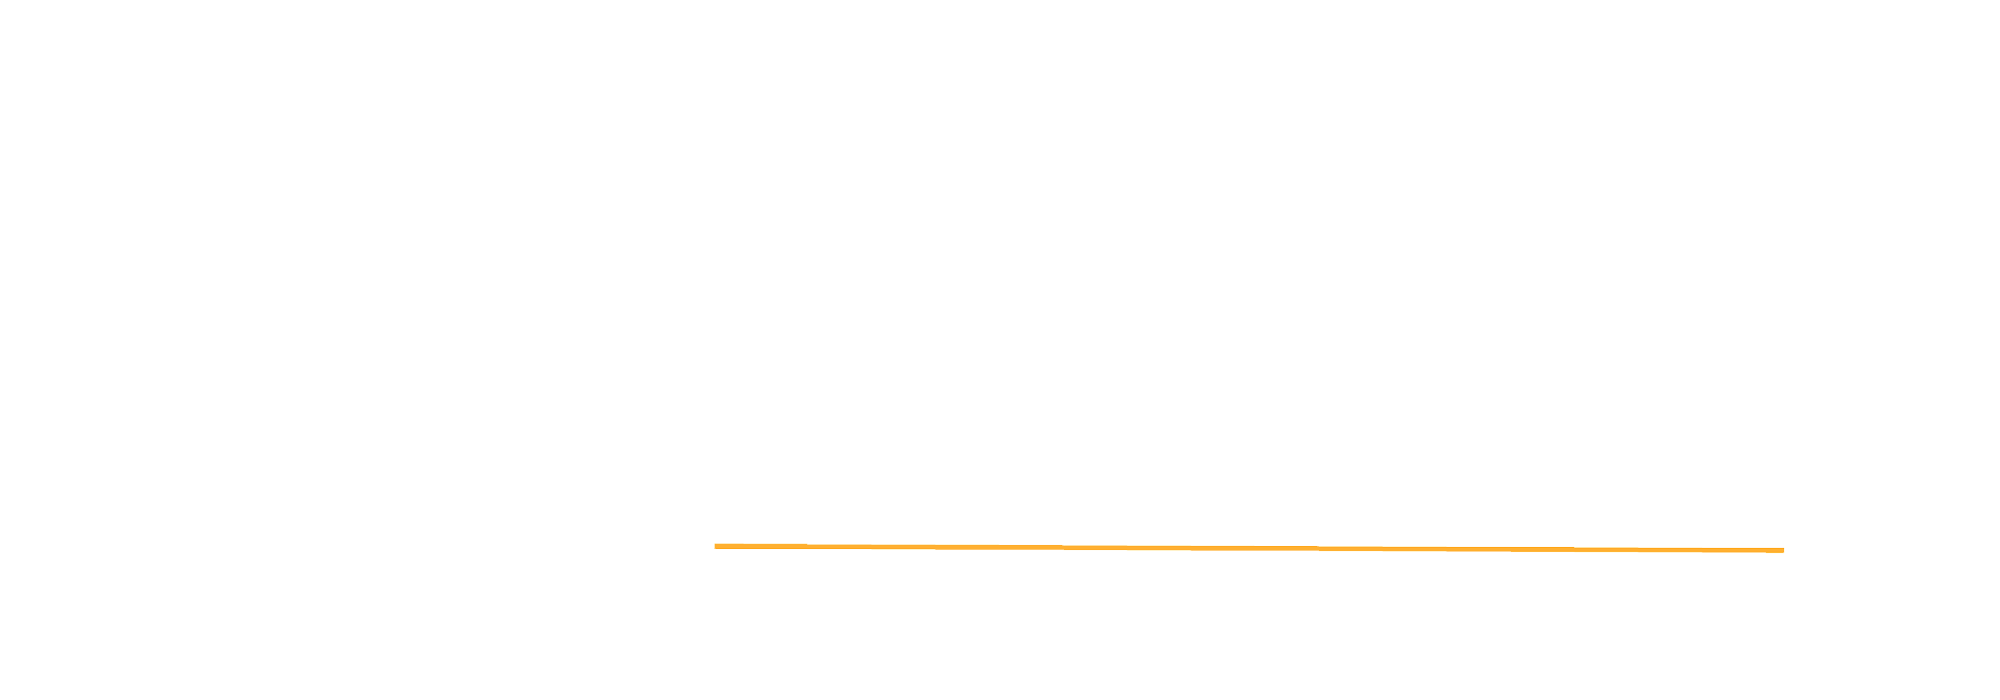 oxygen forensics extractor